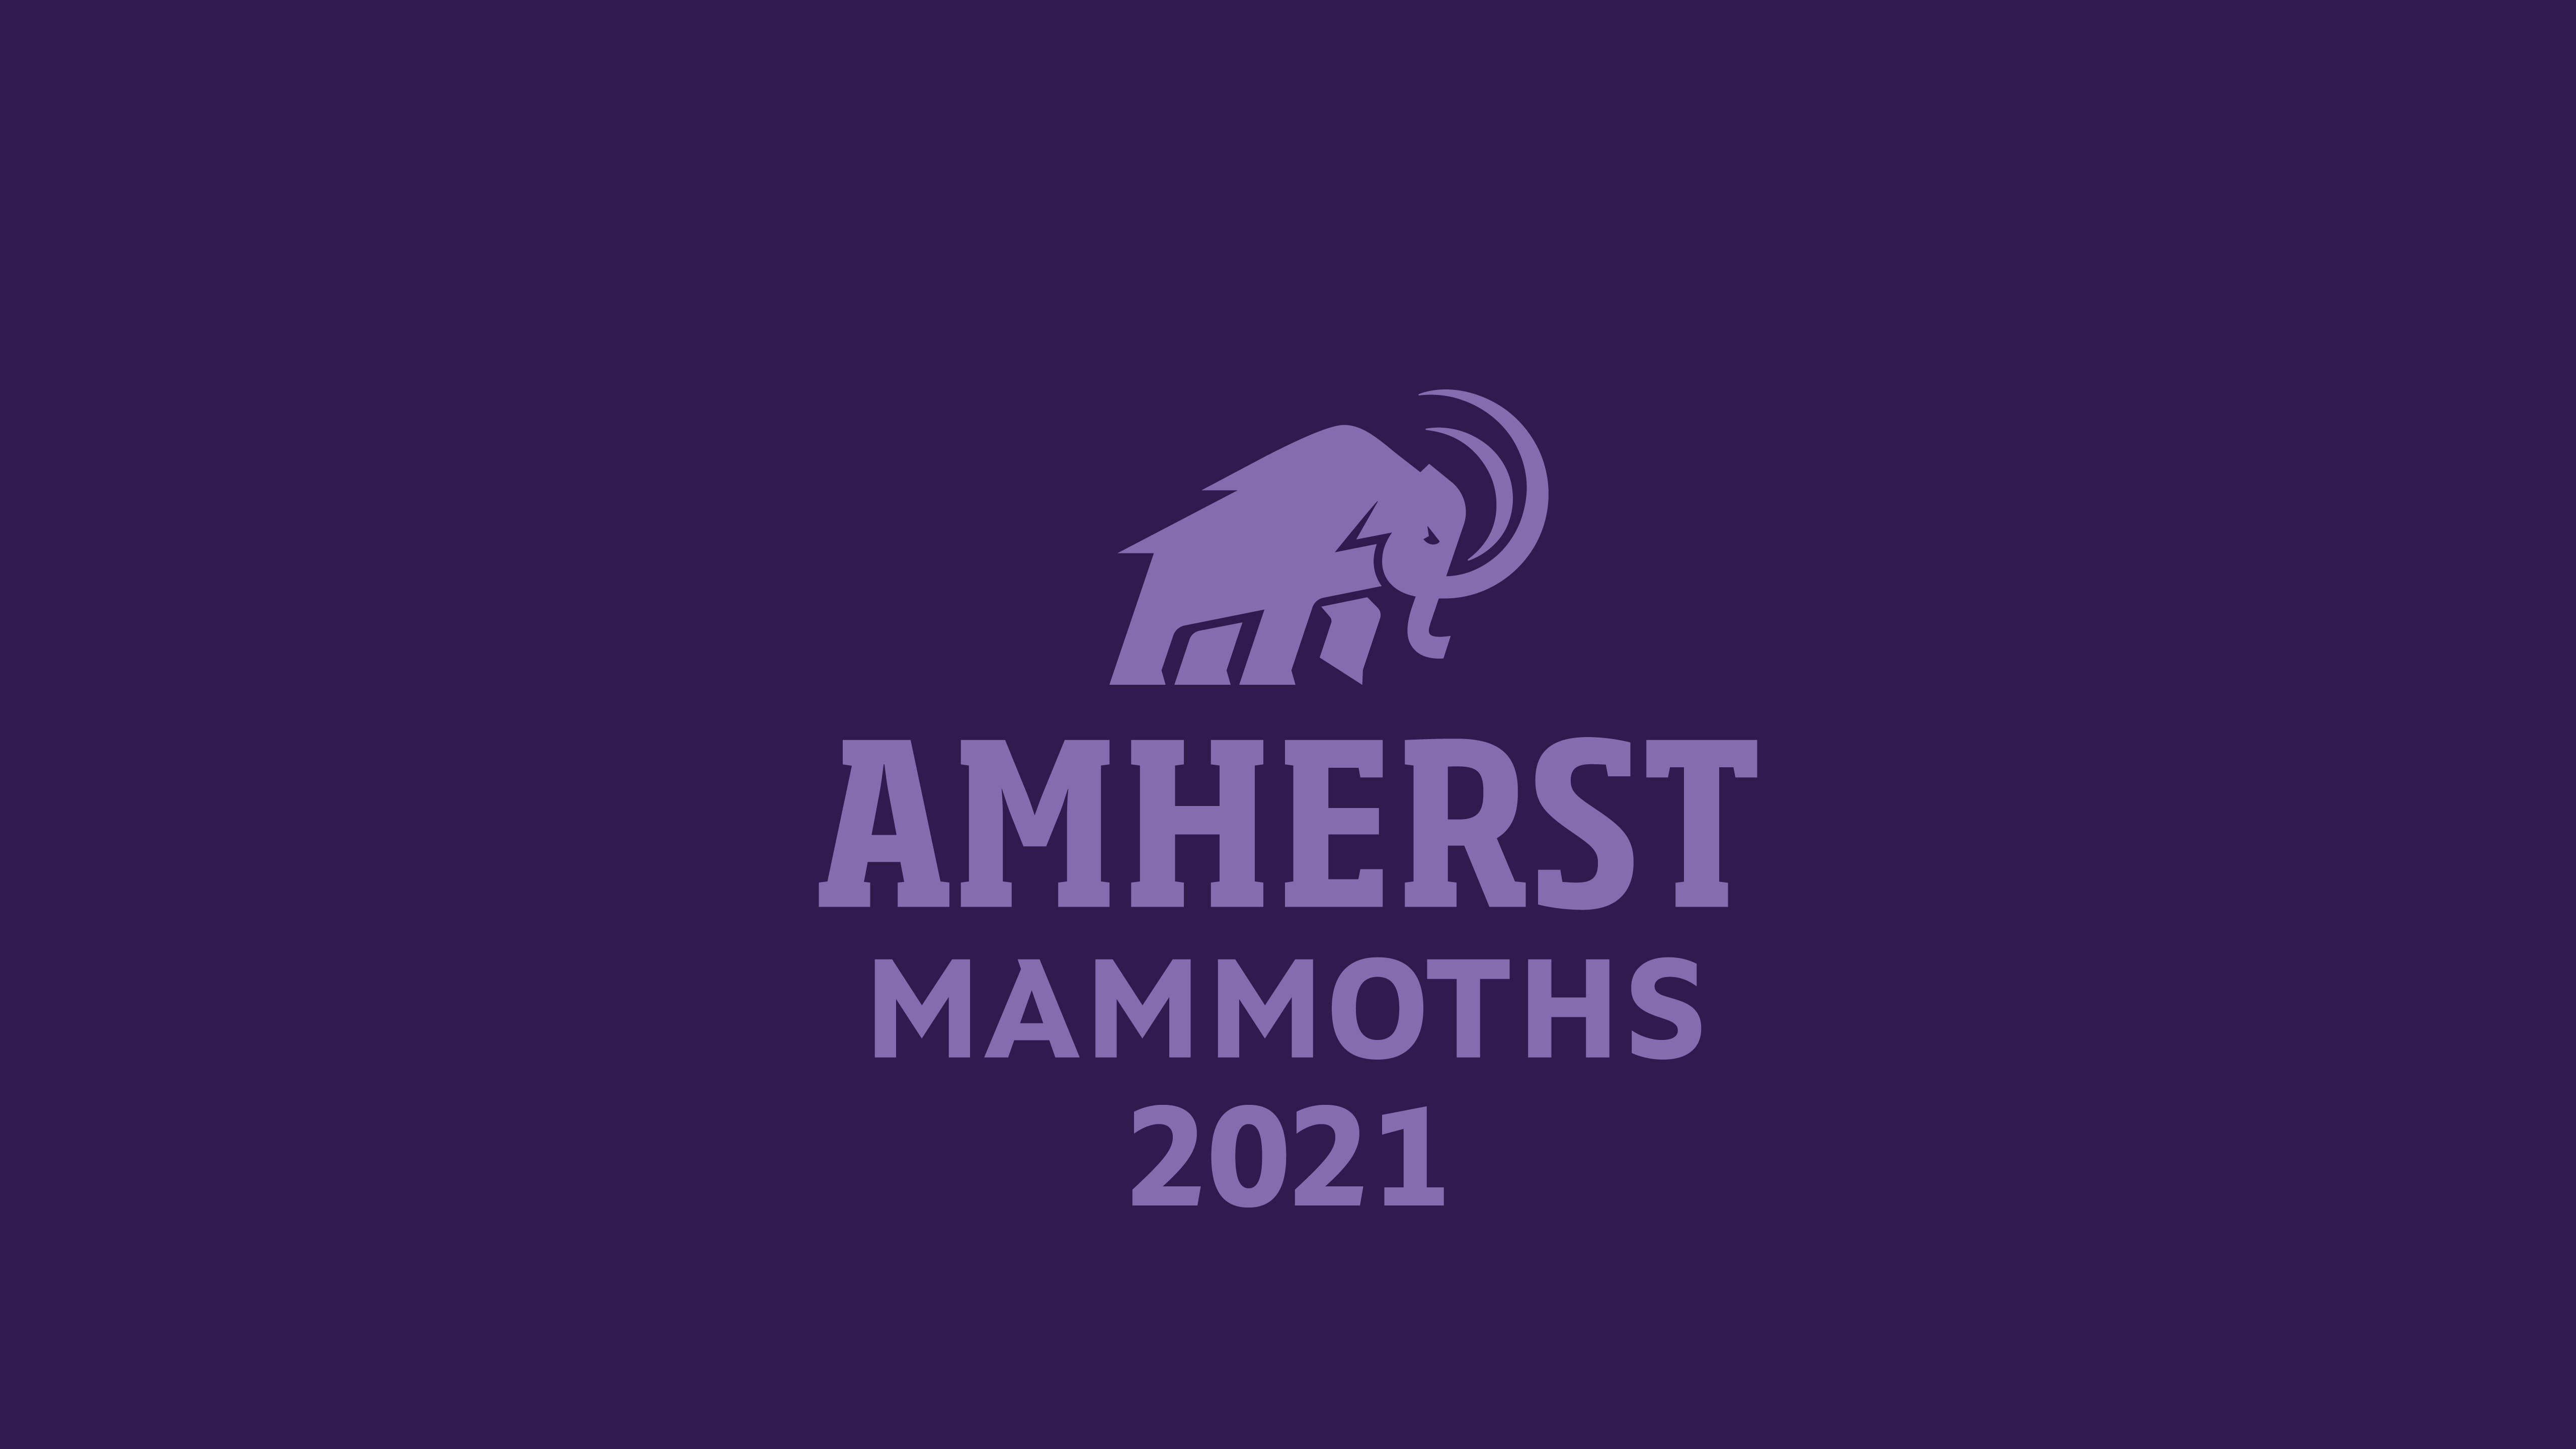 Amherst mammoths 2021